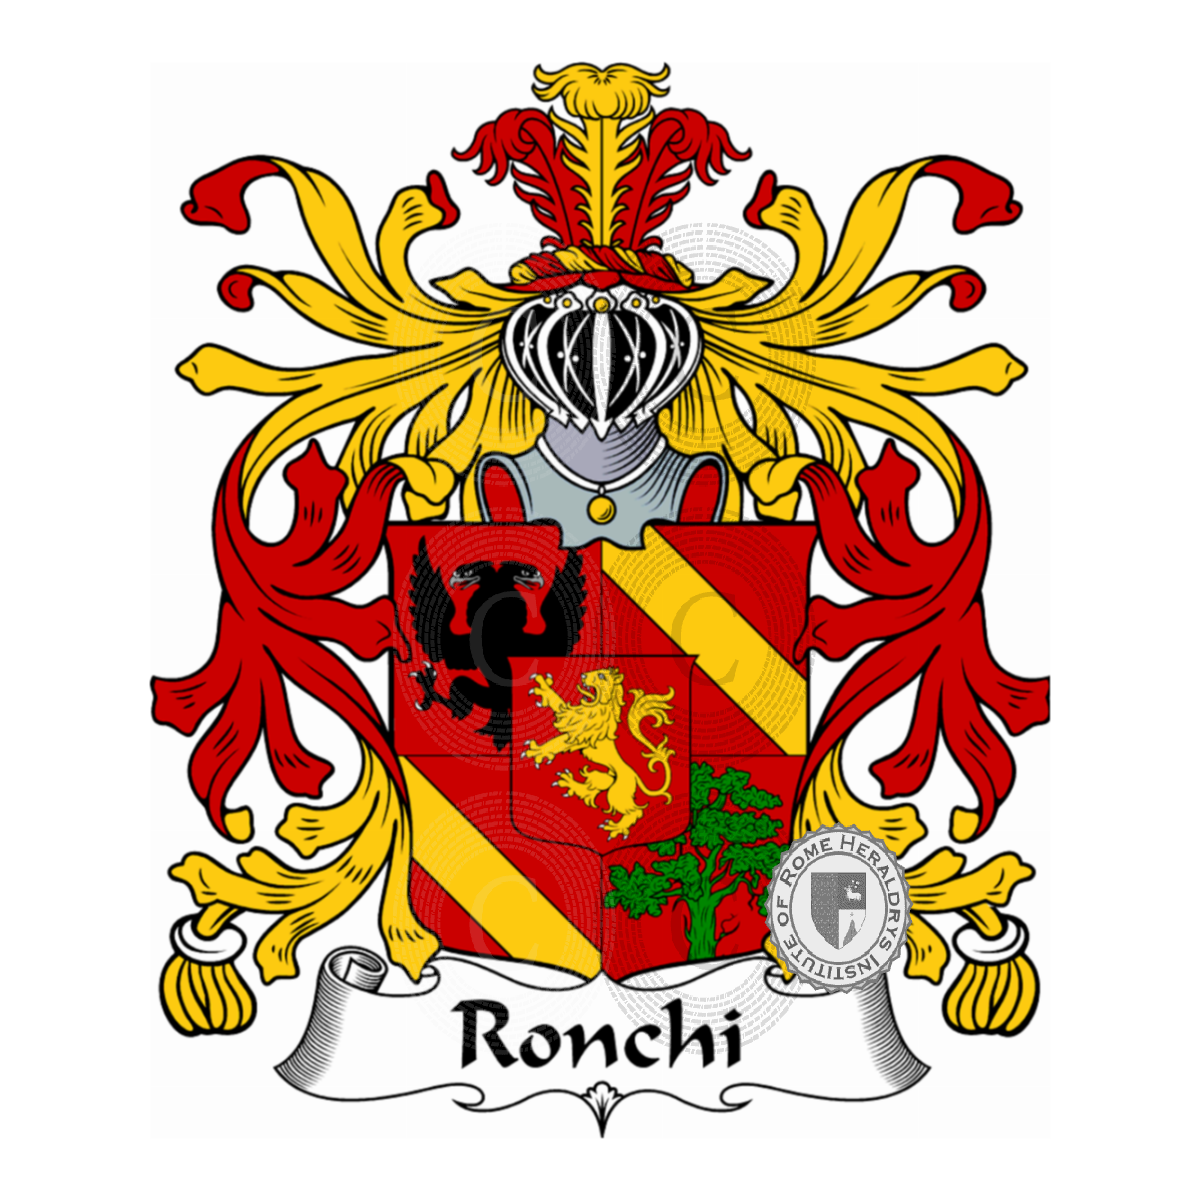 Brasão da famíliaRonchi, Ronch (da),Ronchi Braccioli,Ronco (da),Ronghi